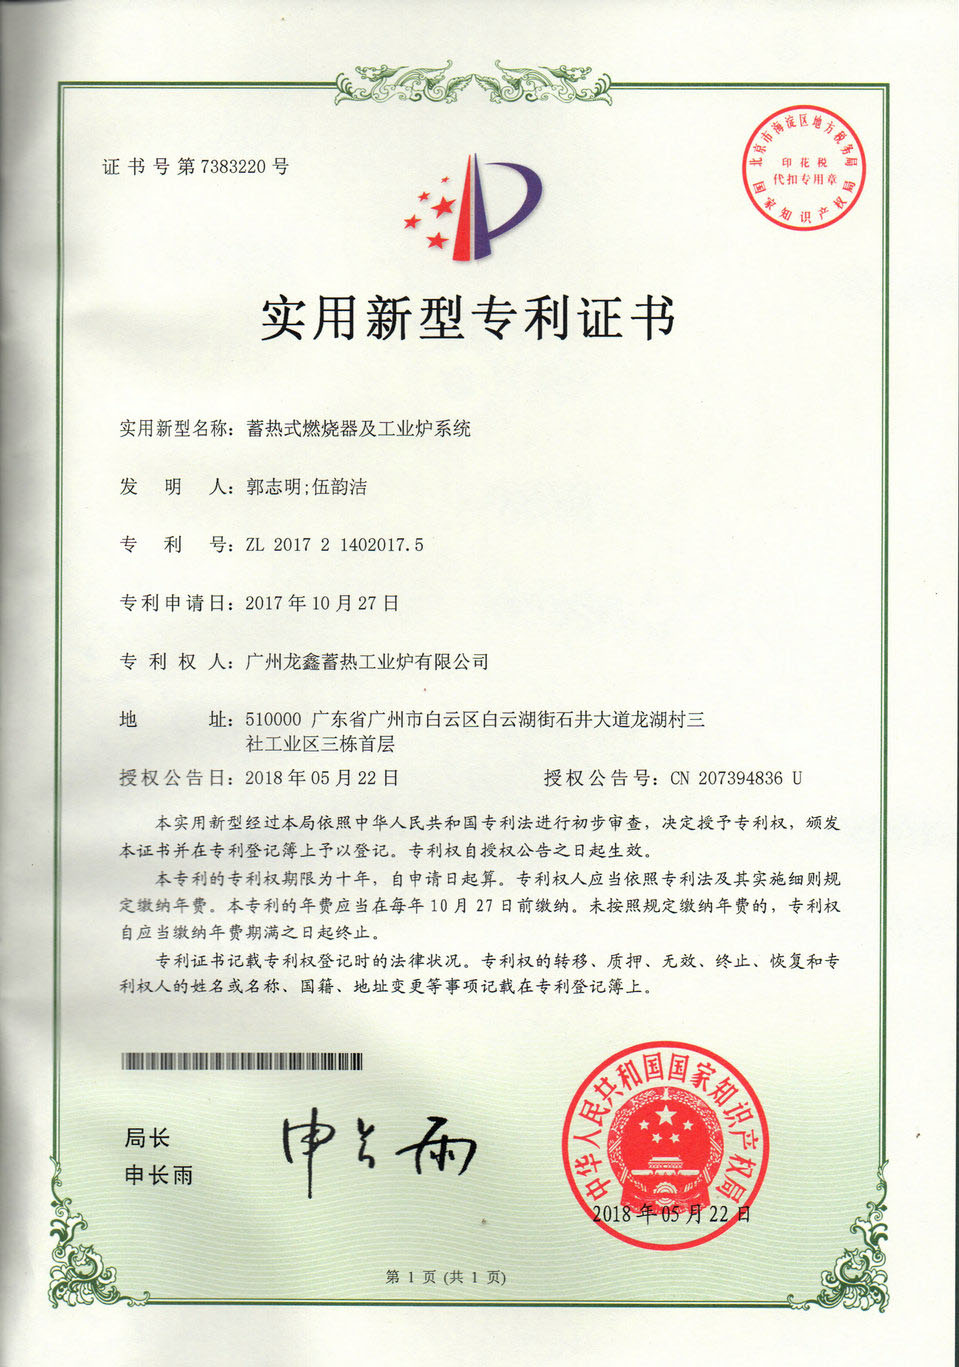 Patent certificate regenerative burner and industrial furnace system